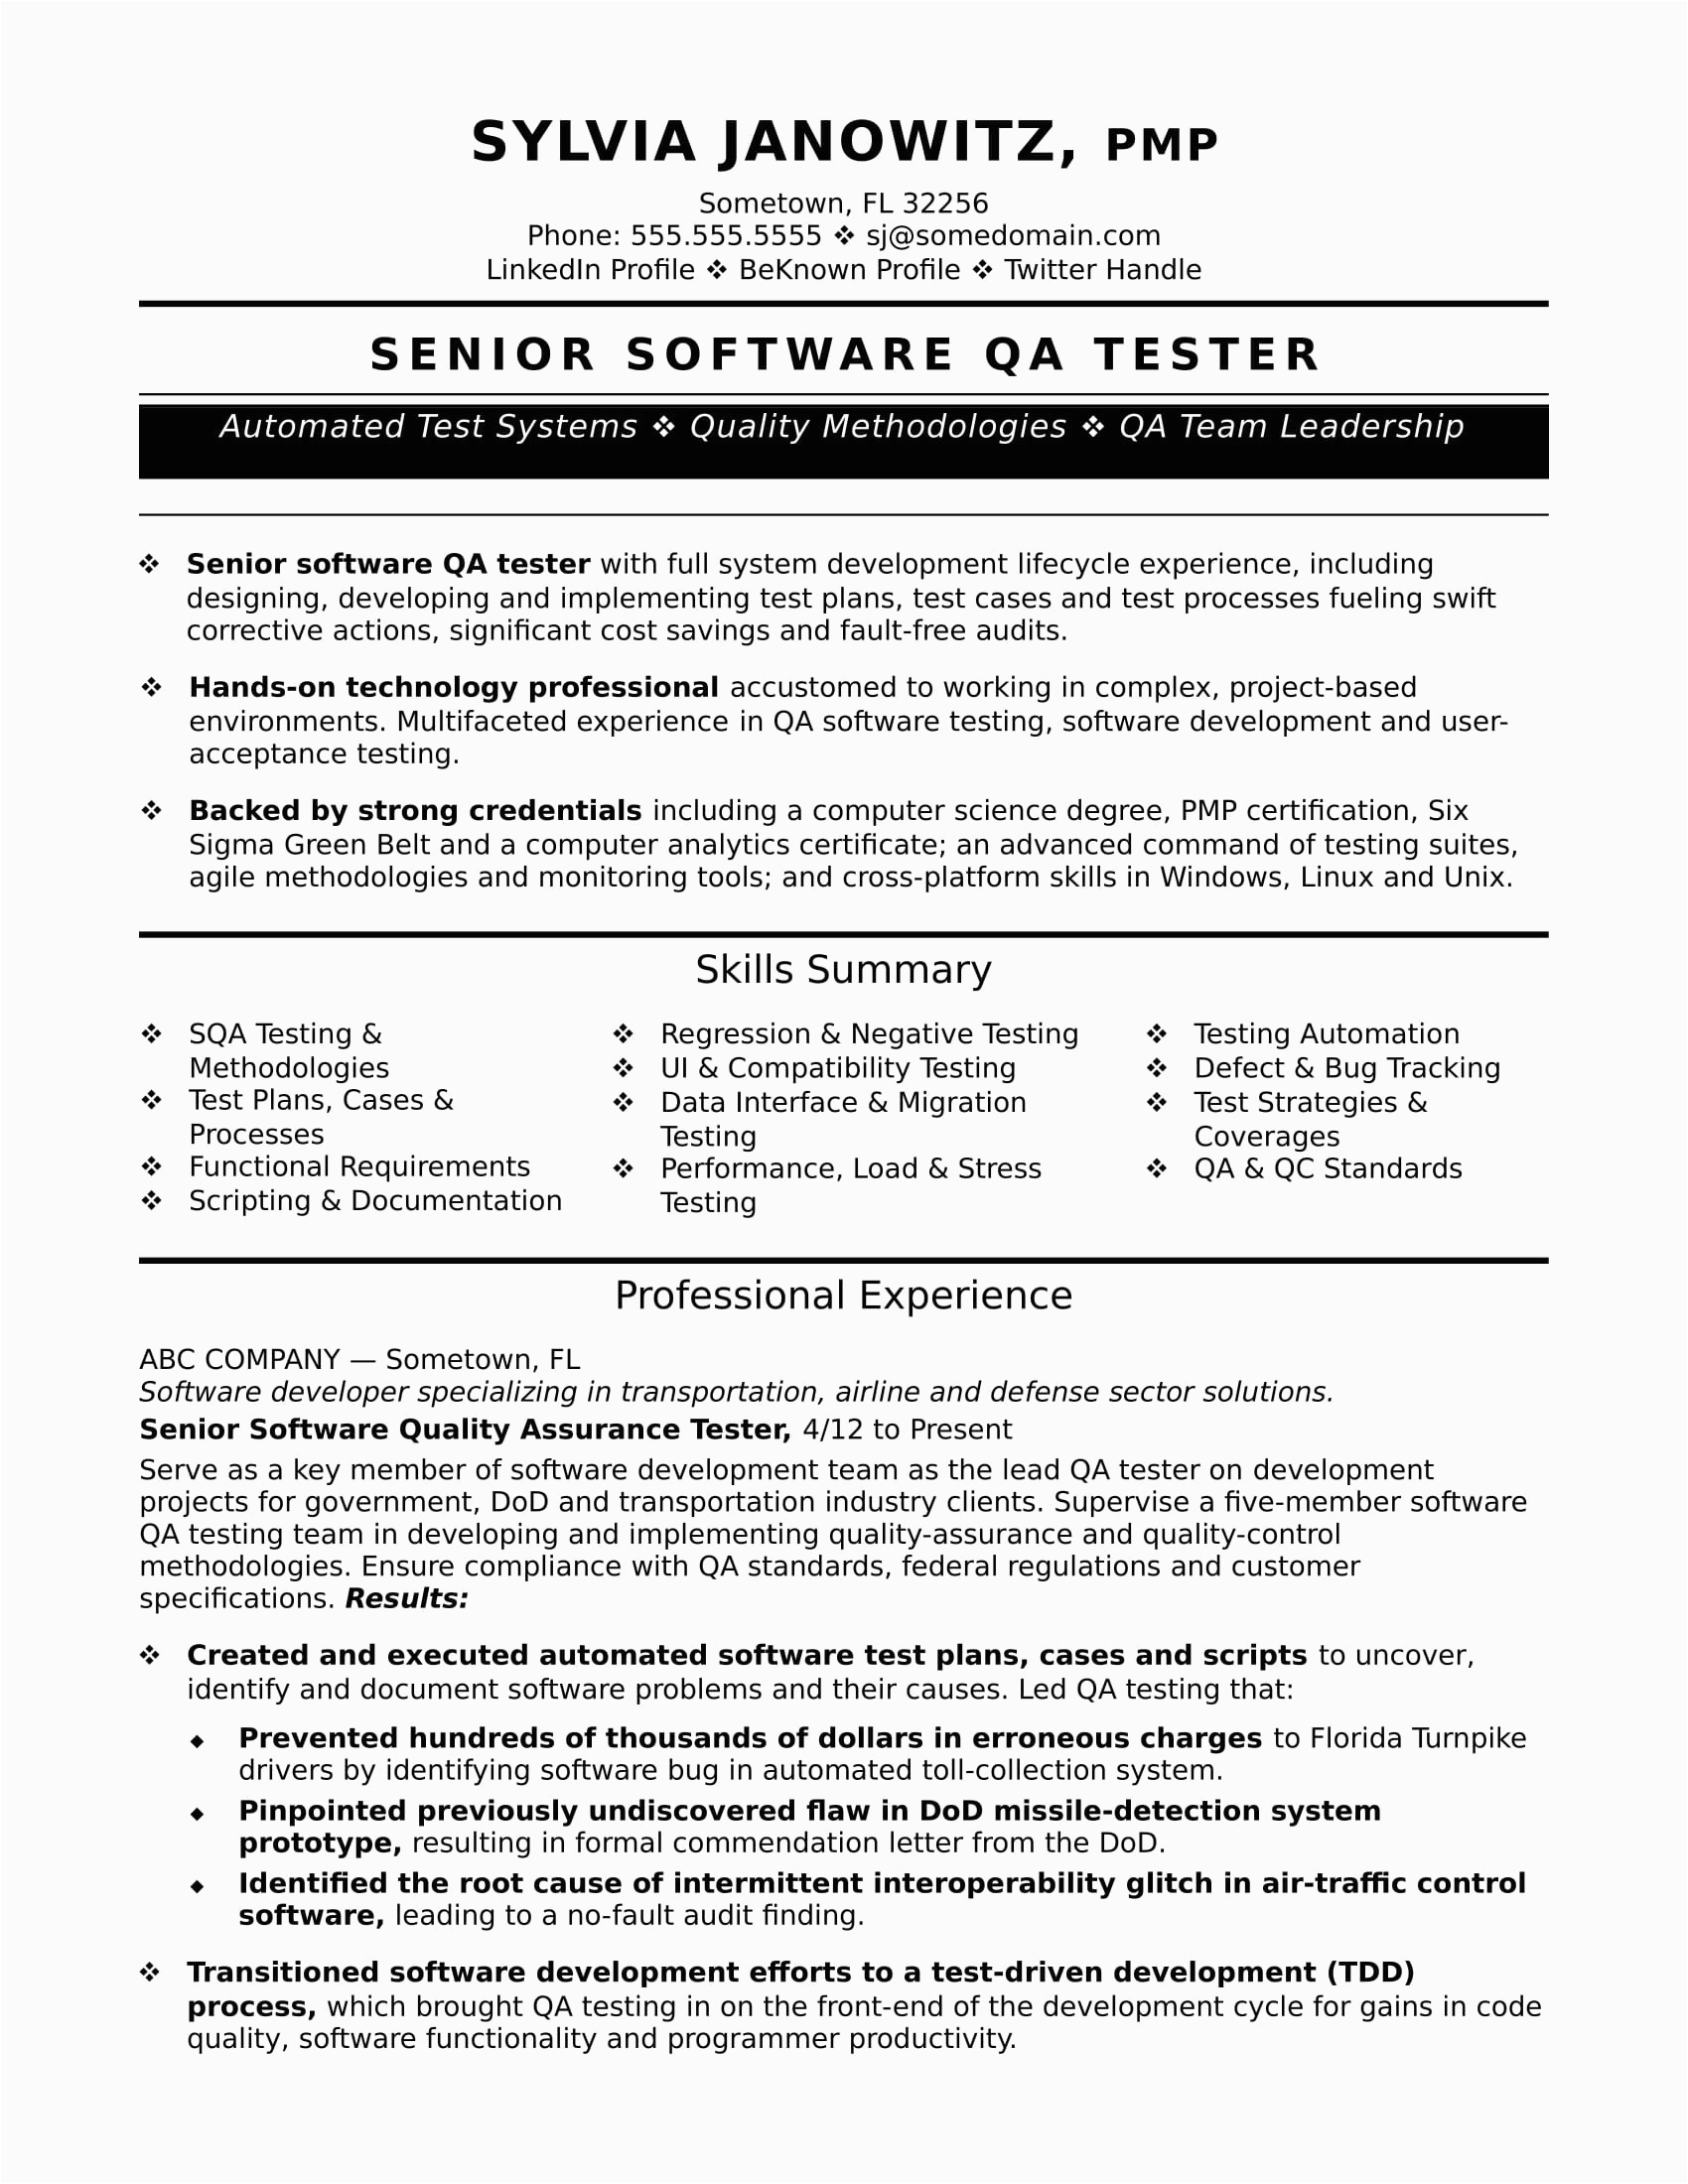 Sample Resume for Experienced Database Test Engineer Experienced Qa software Tester Resume Sample